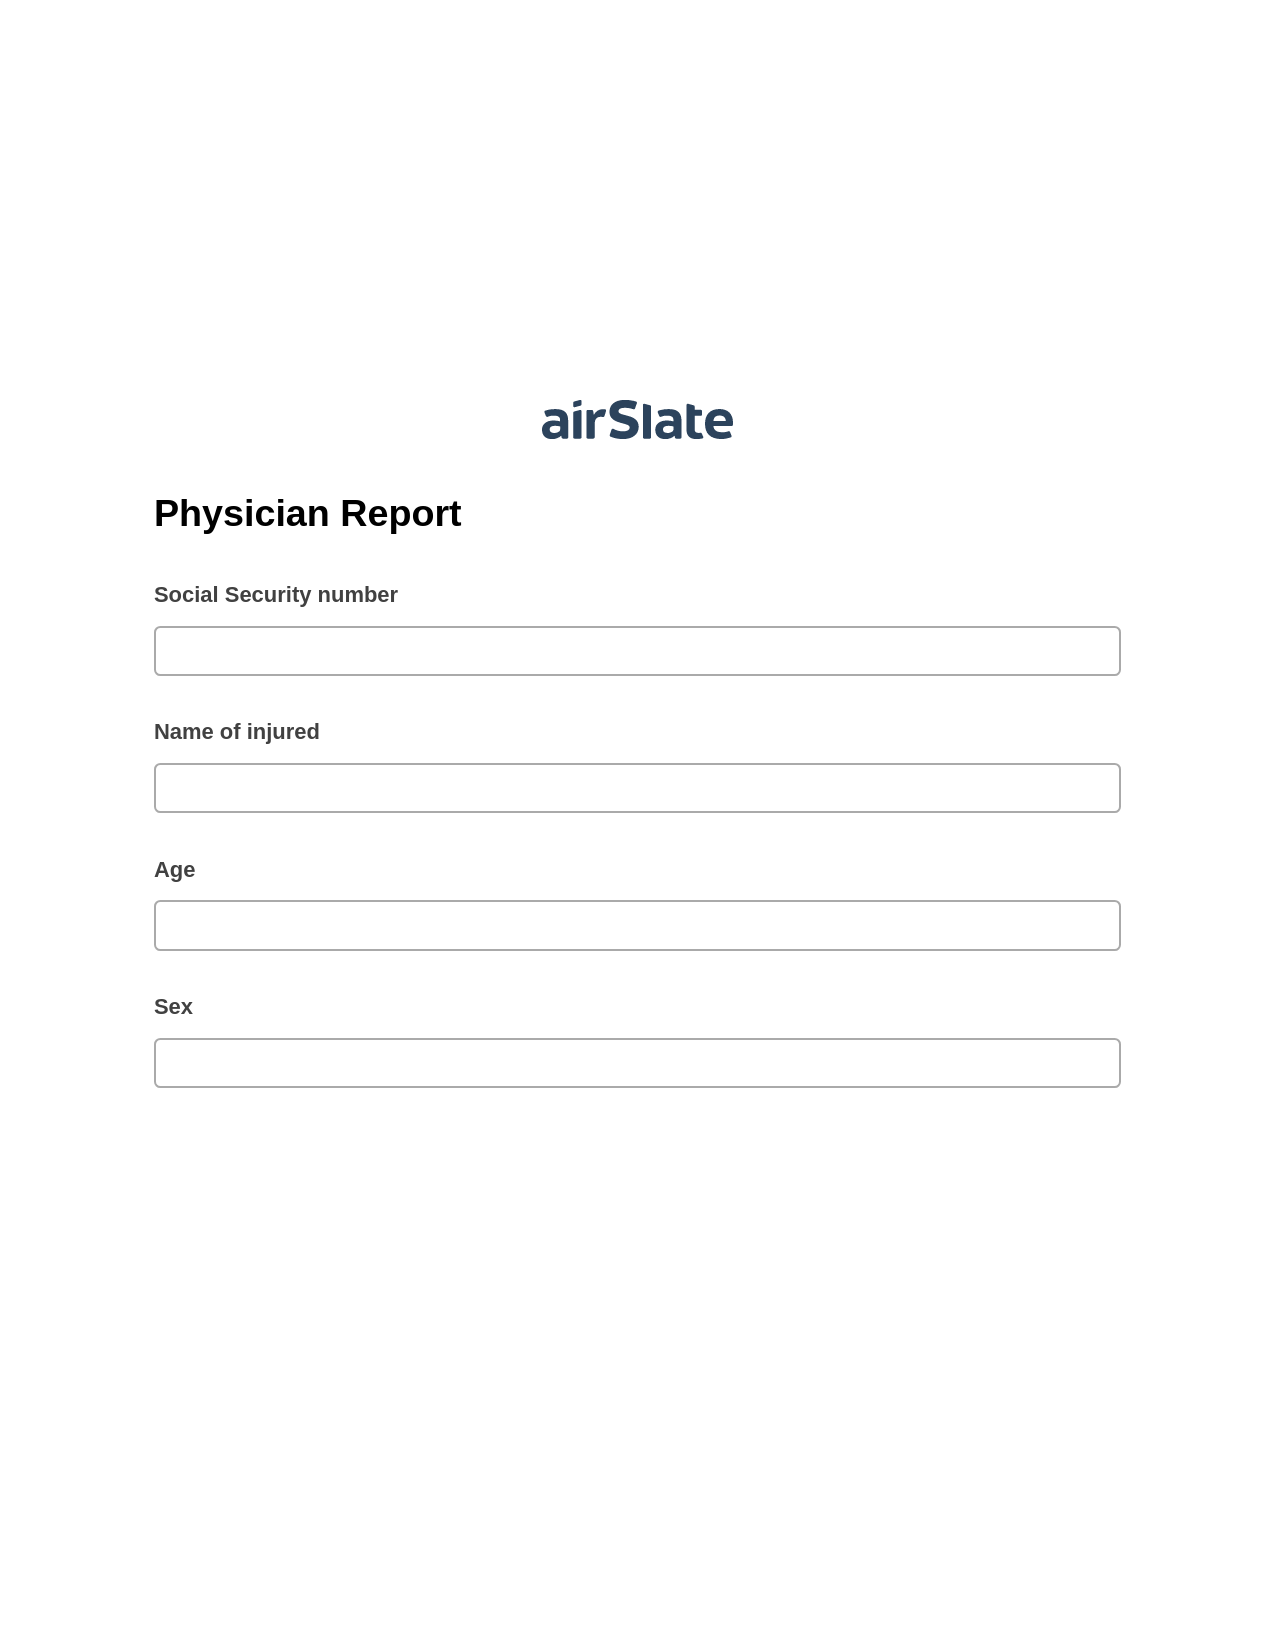 Multirole Physician Report Pre-fill from Excel Spreadsheet Bot, Lock the Slate Bot, Post-finish Document Bot